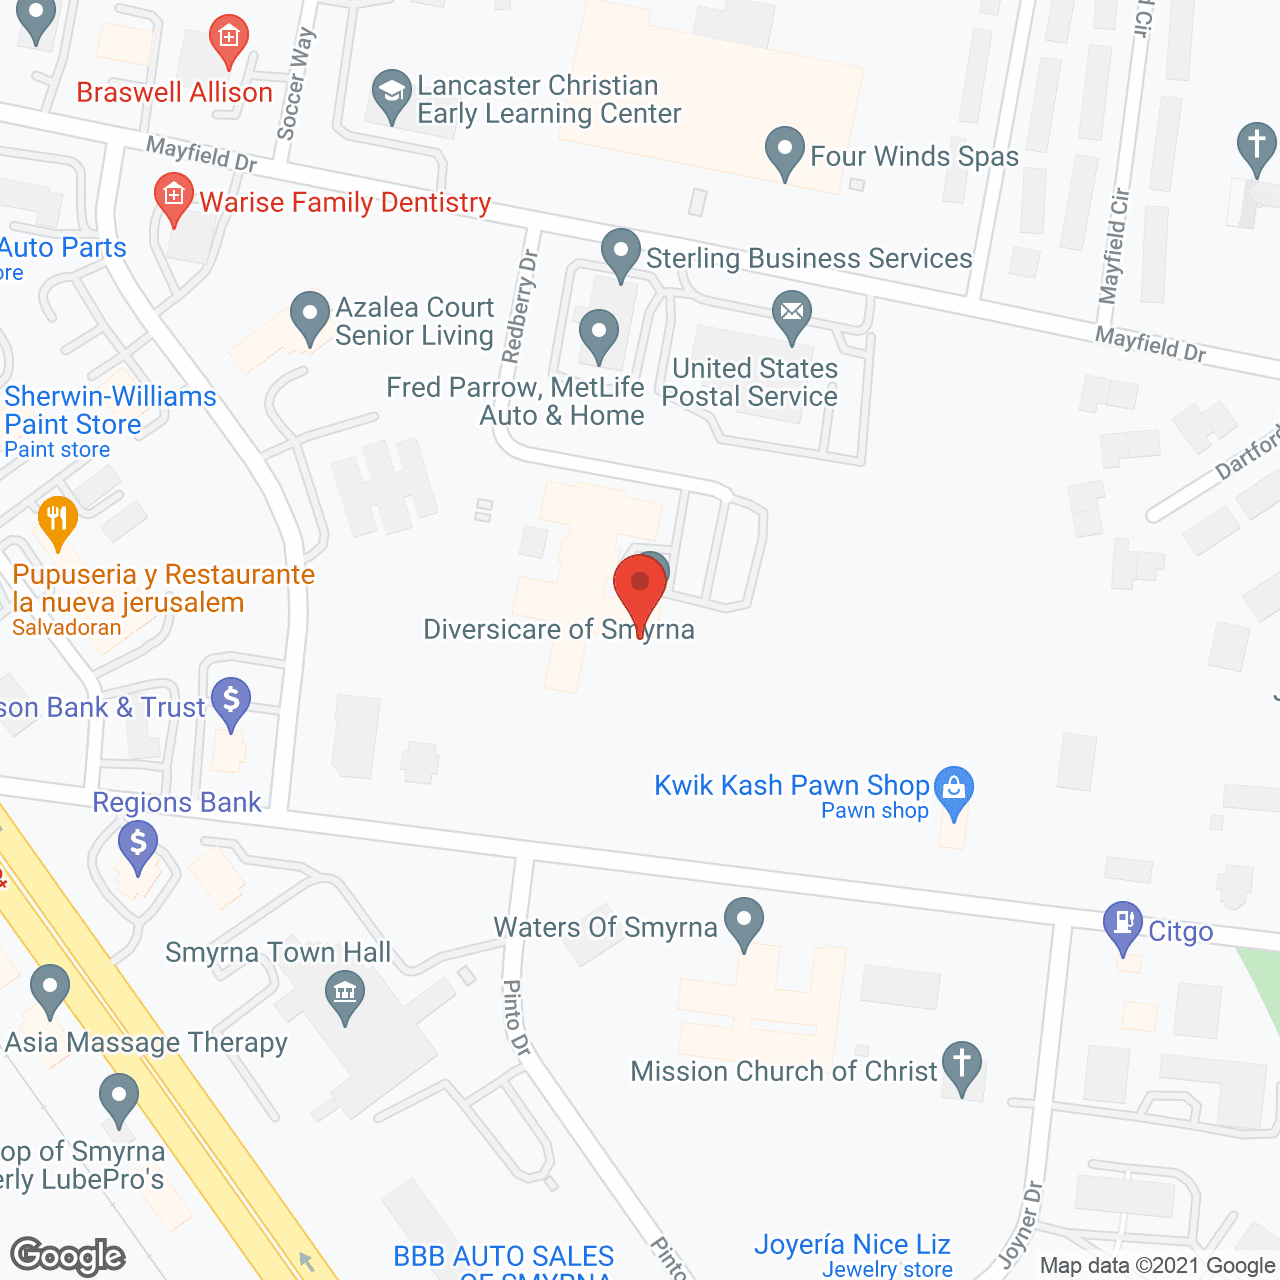 Diversicare of Smyrna in google map